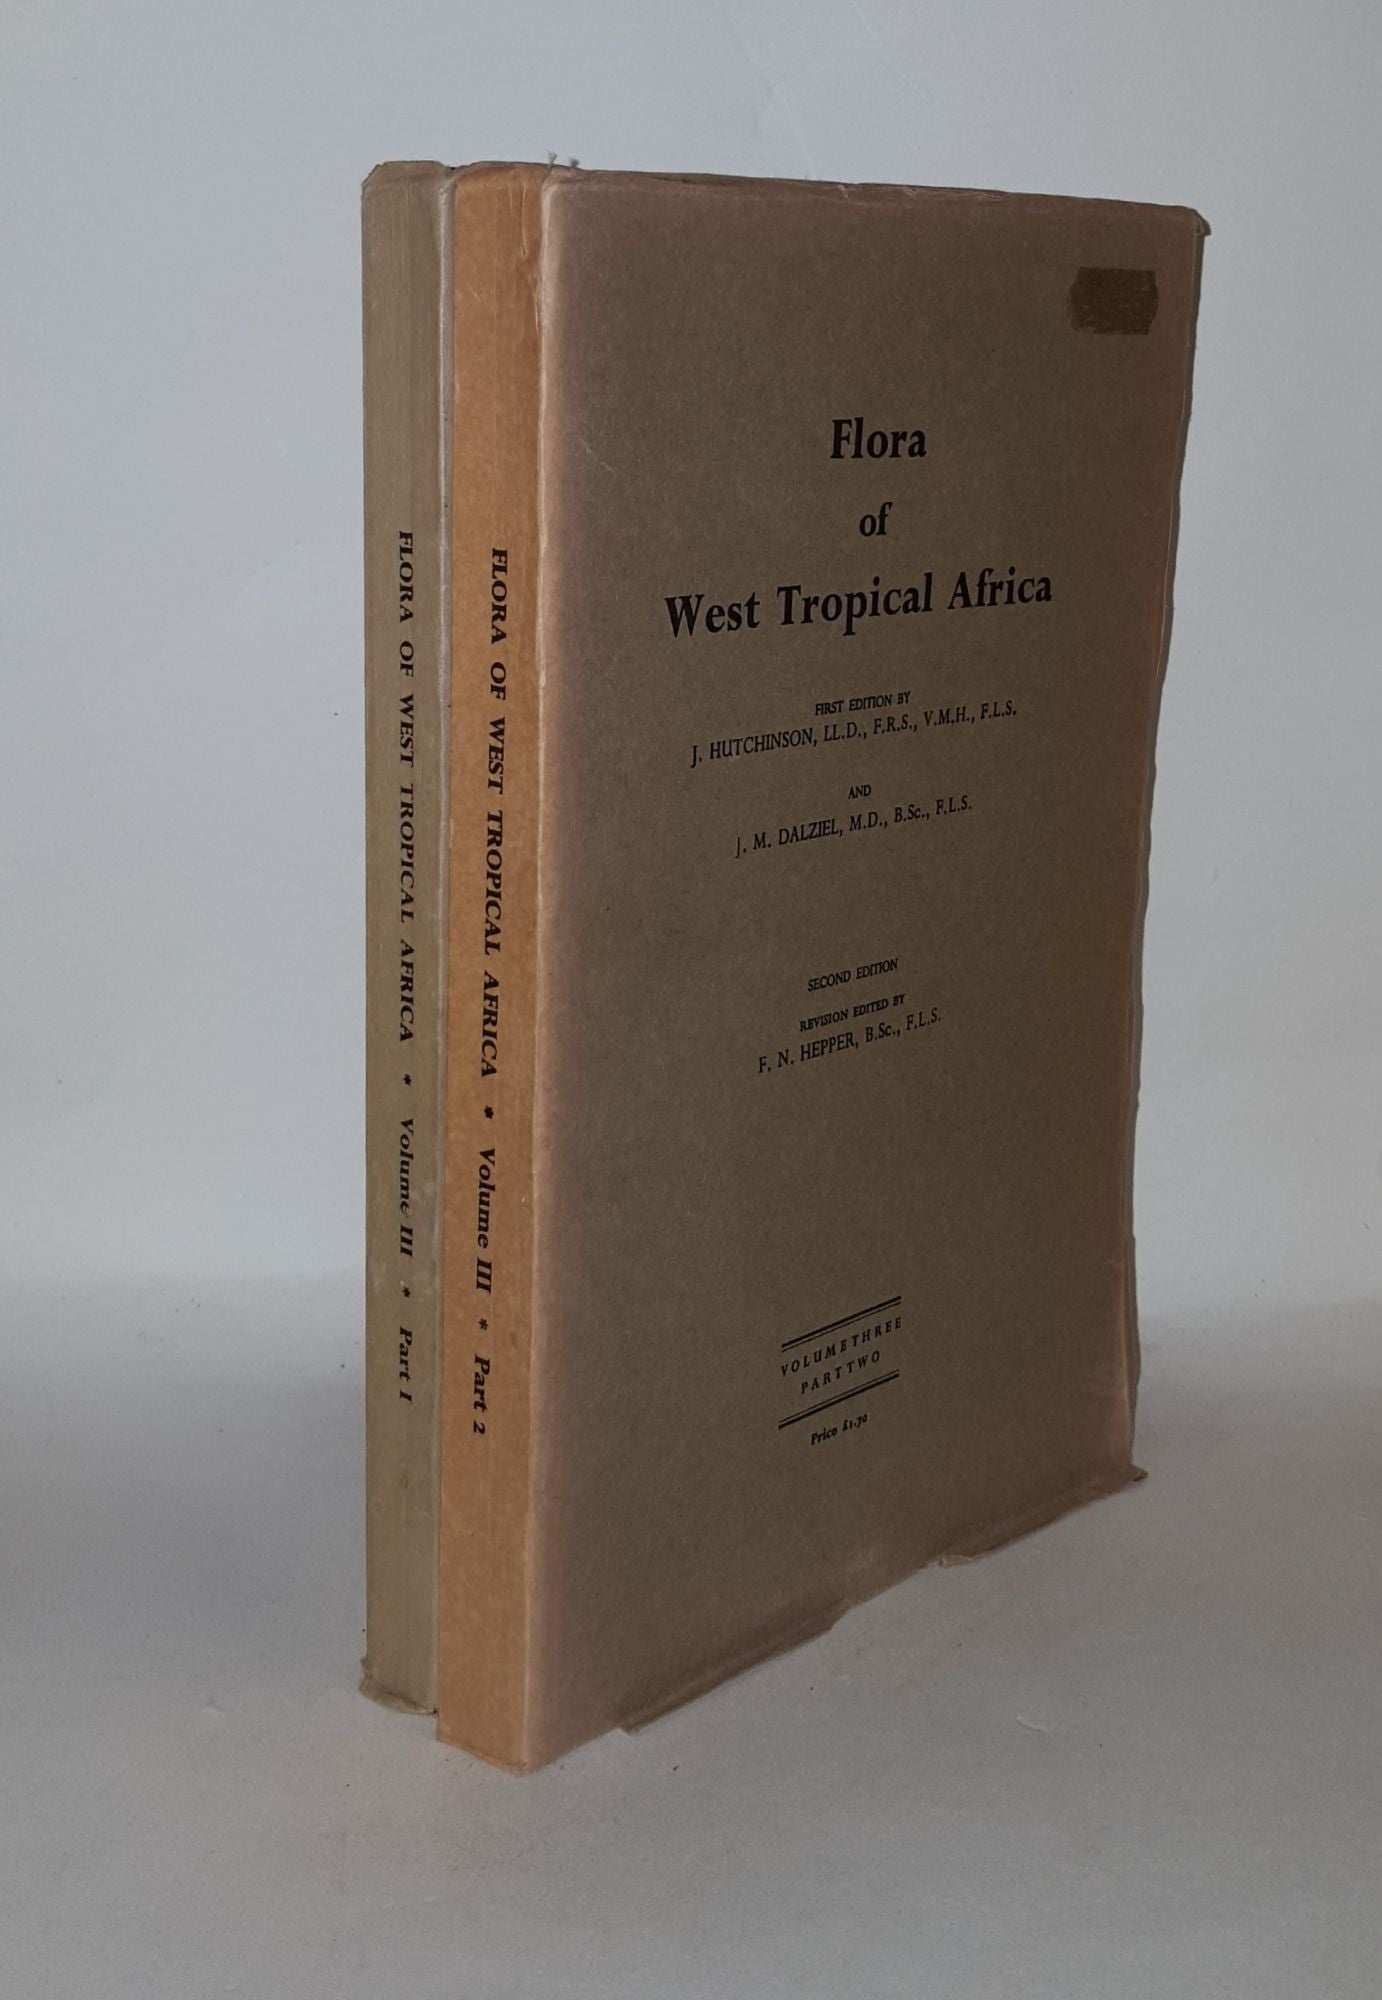 HUTCHINSON J., DALZIEL J.M. - Flora of West Tropical Africa Volume III Parts I & II